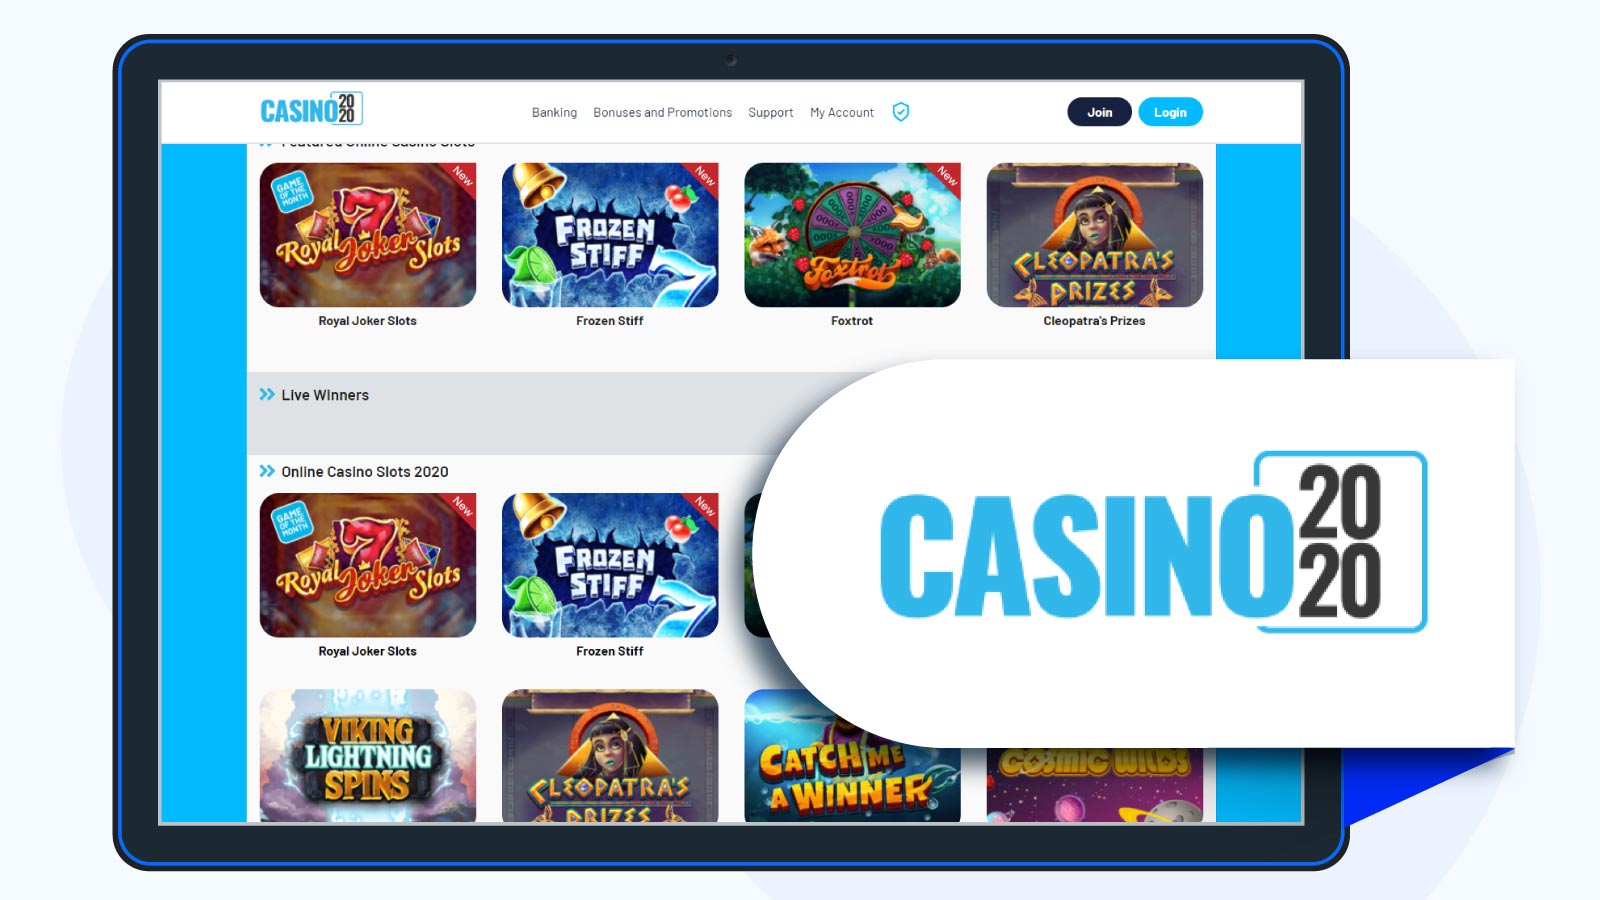 Casino 2020 - Editor's Favorite Casino Bonus Package